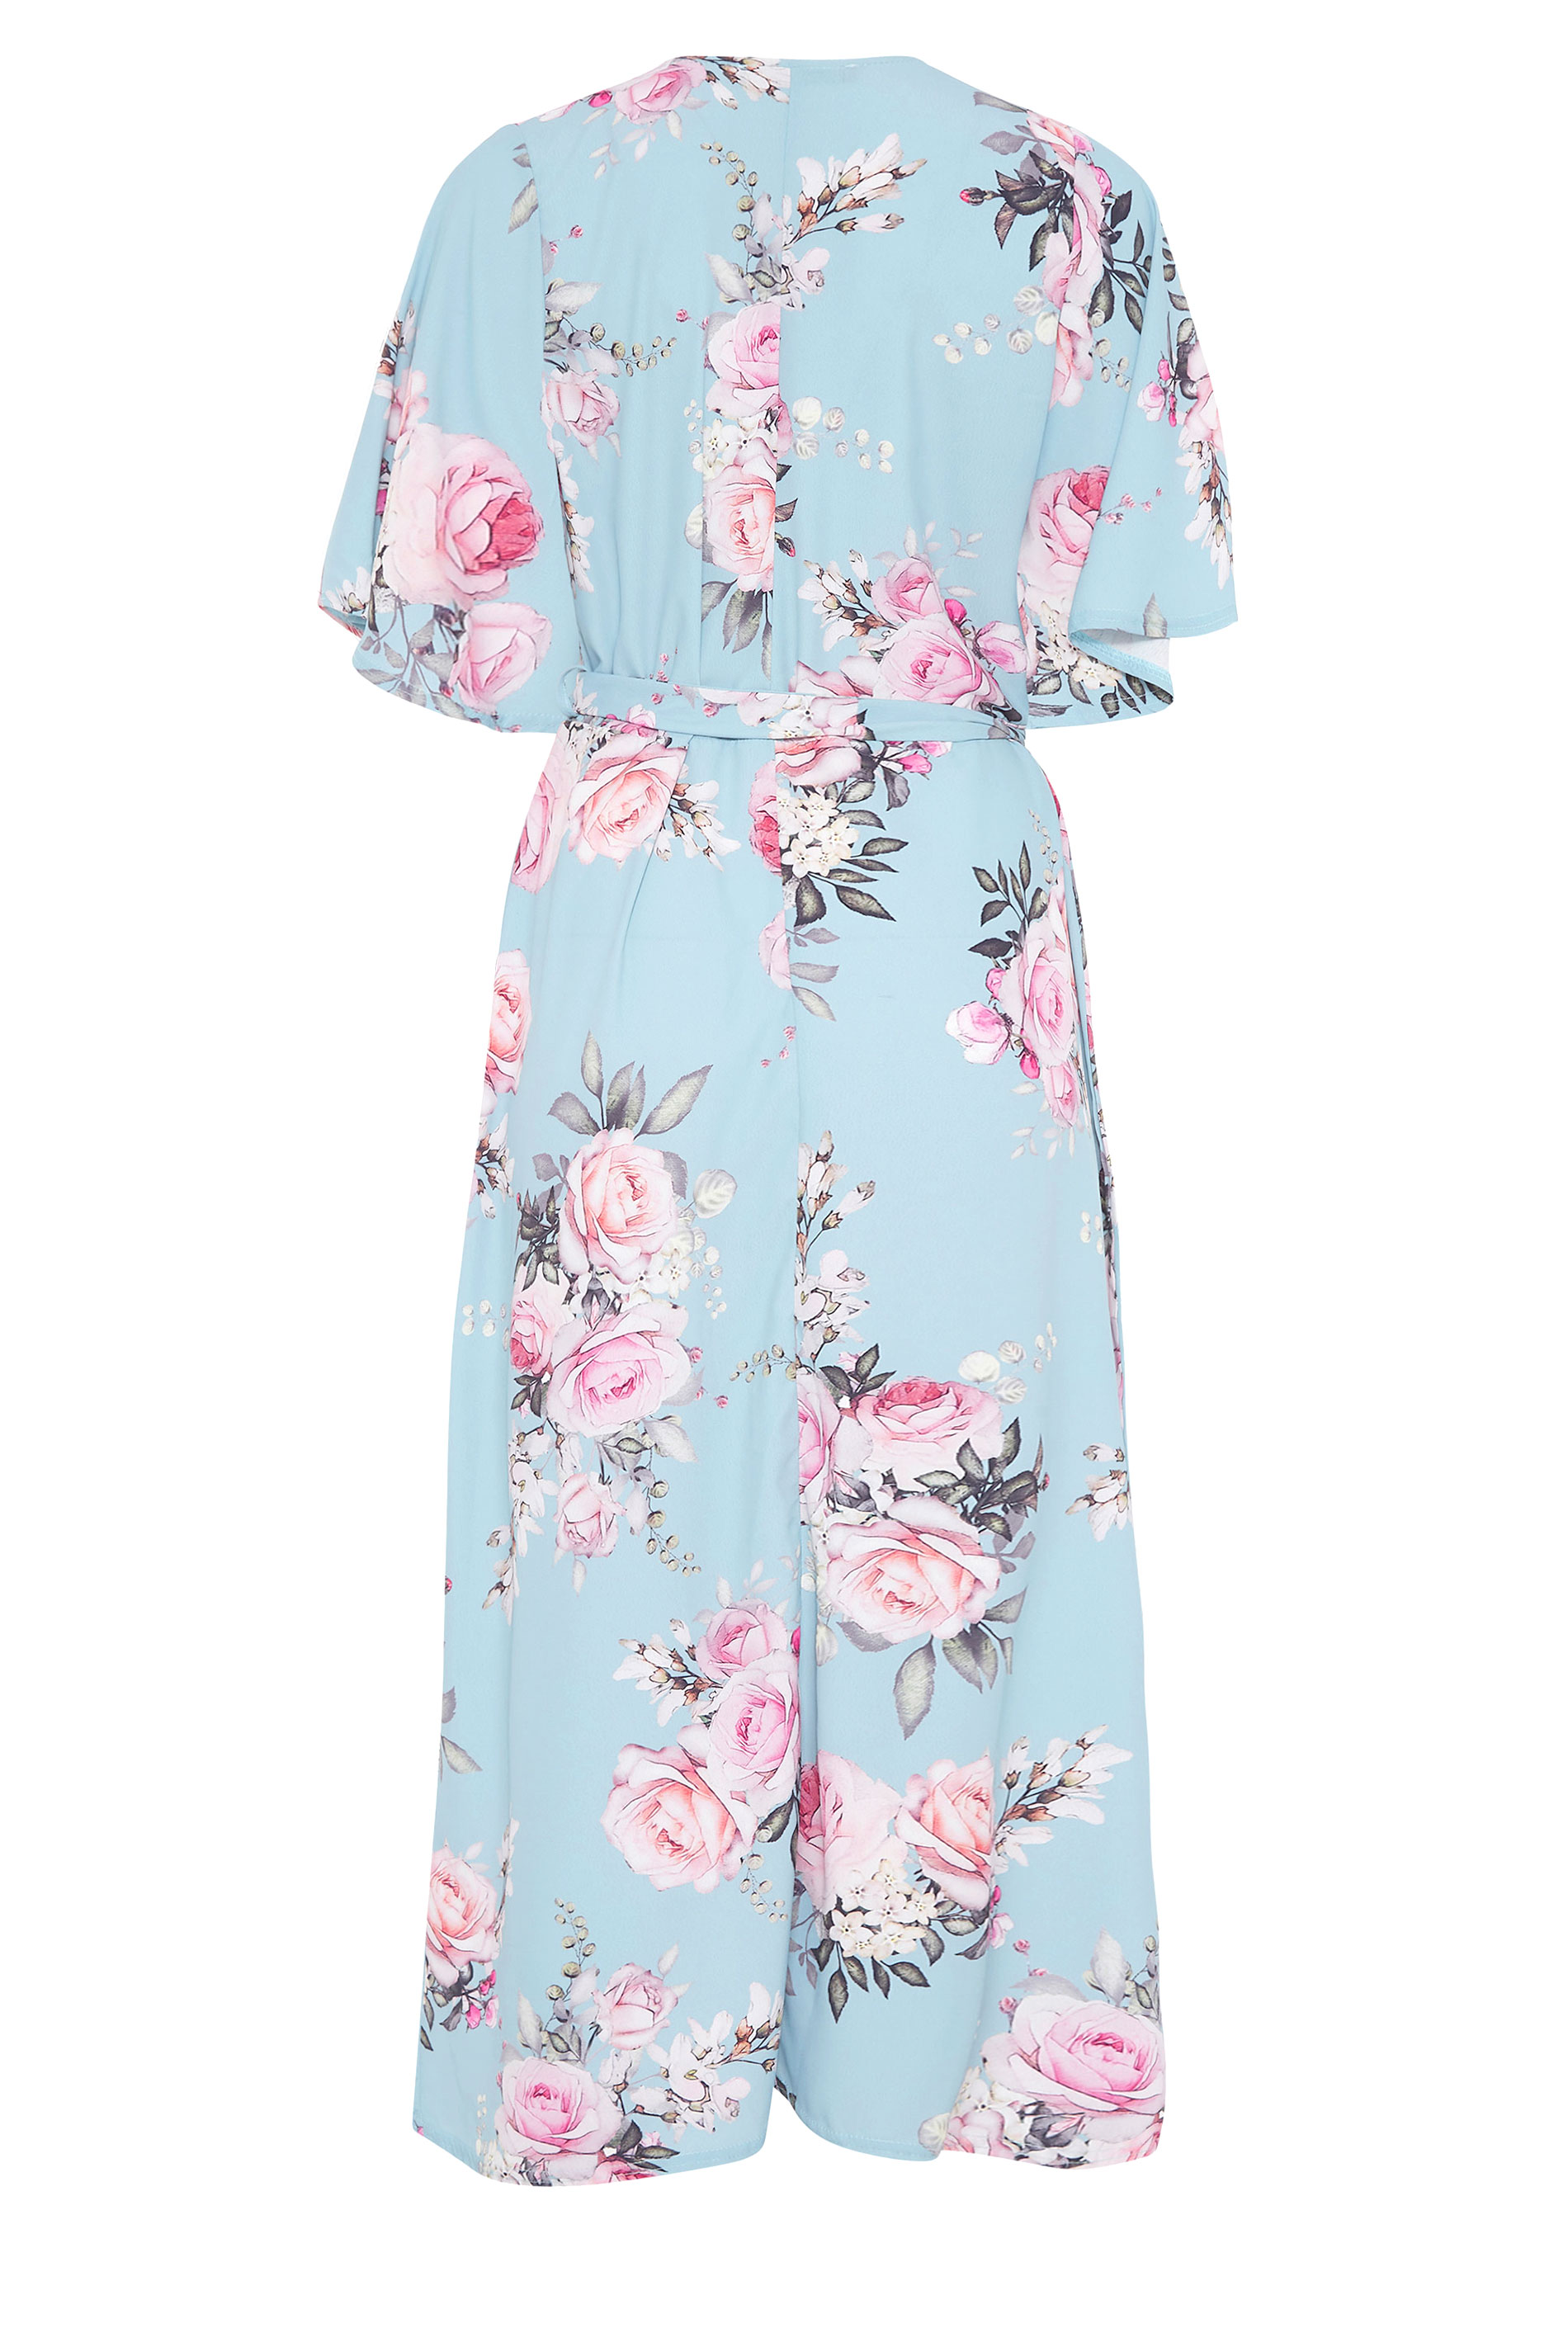 LTS Blue Floral Wrap Dress | Long Tall Sally